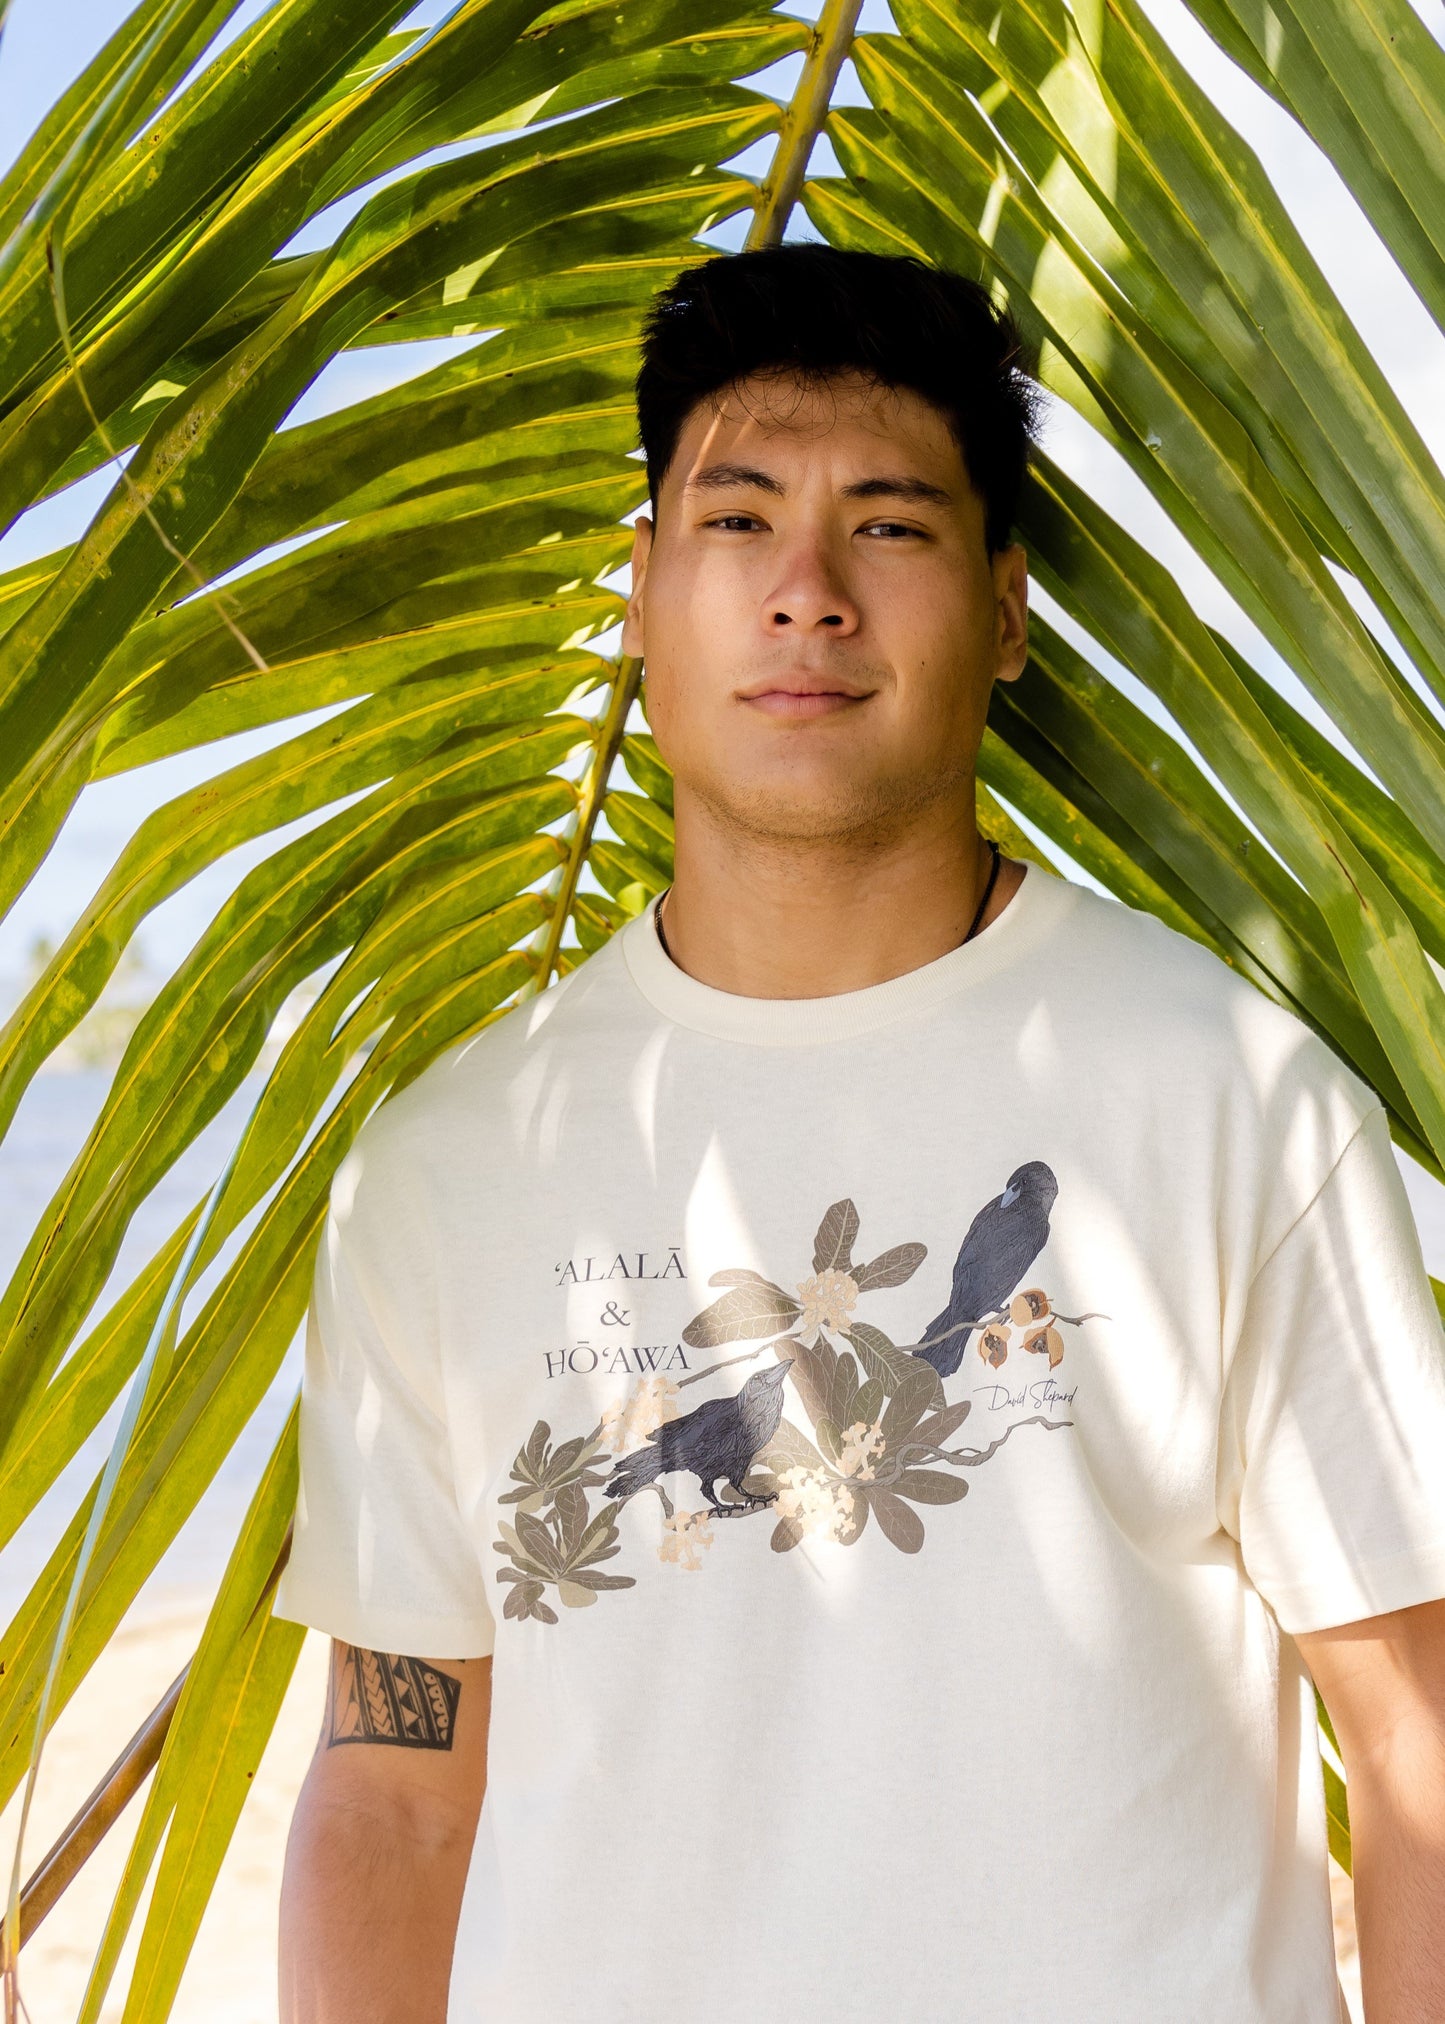 Hō‘awa & The ‘Alalā on Sand T-Shirt